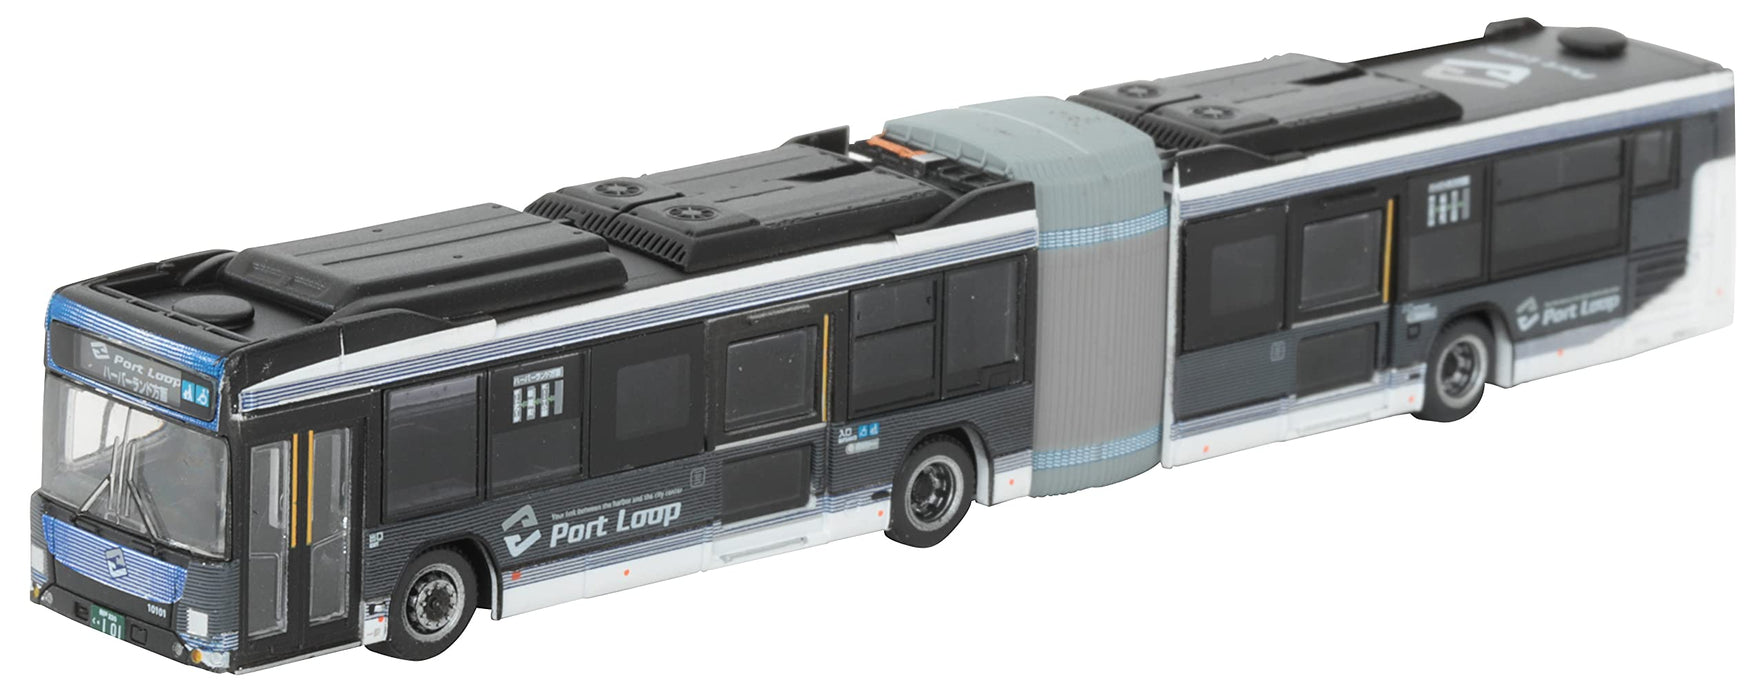 Tomytec Bus-Kollektion – Shinki Port Loop Gelenkbus-Diorama, limitierte Auflage, 316541